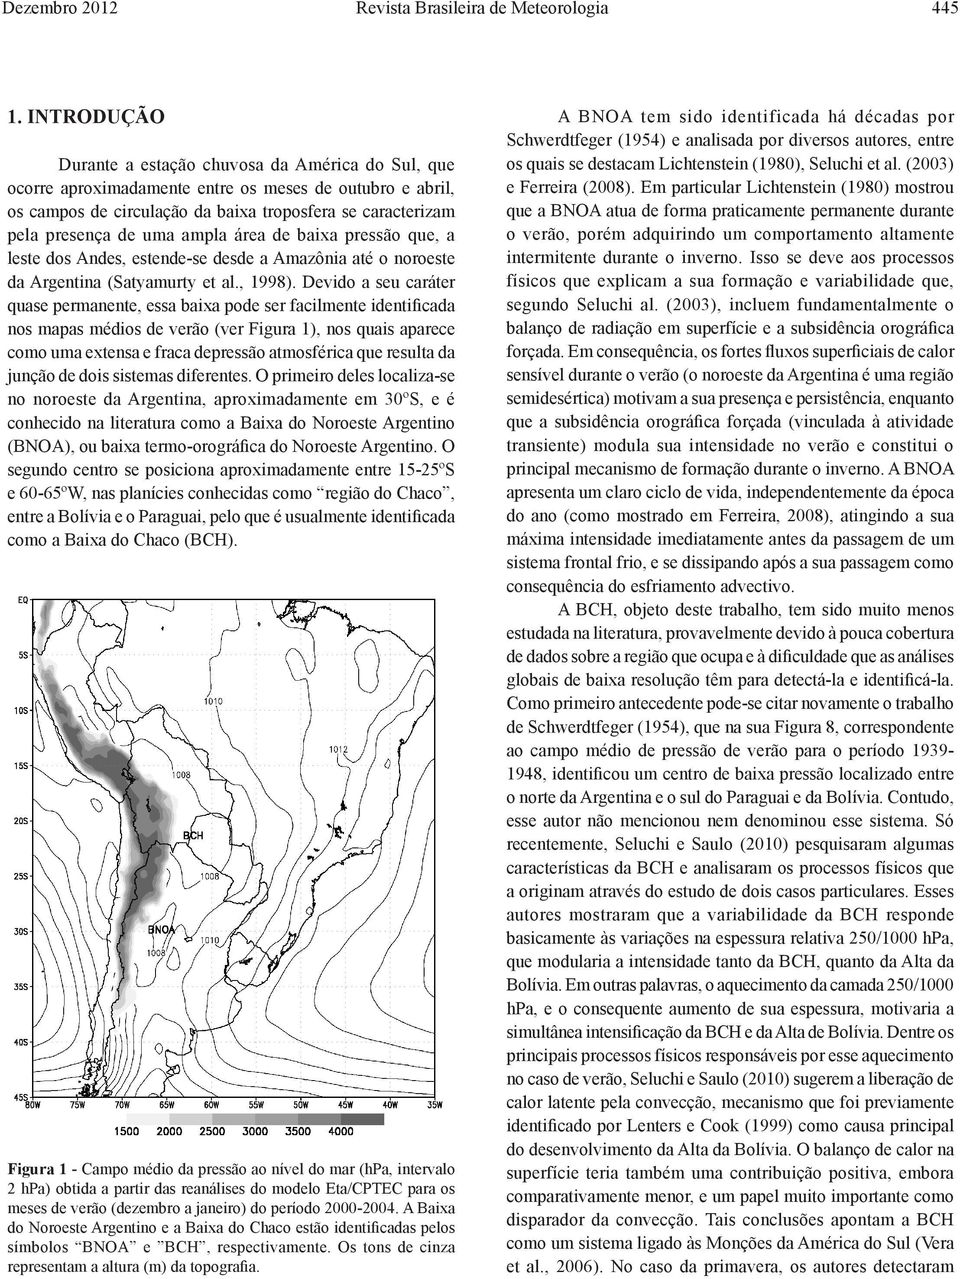 ampla área de baixa pressão que, a leste dos Andes, estende-se desde a Amazônia até o noroeste da Argentina (Satyamurty et al., 1998).